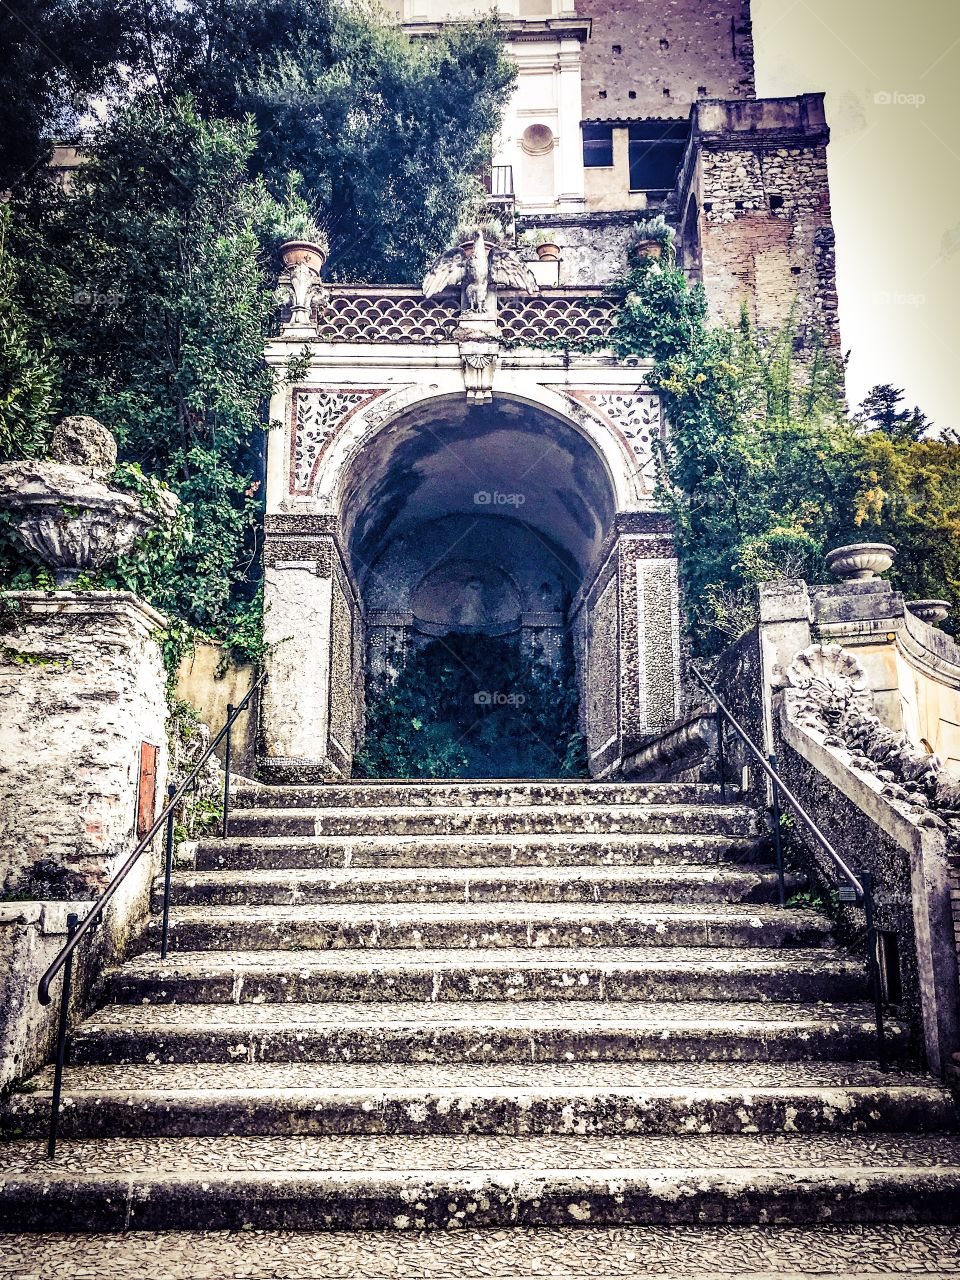 Villa d'Este, Tivoli, Italy 